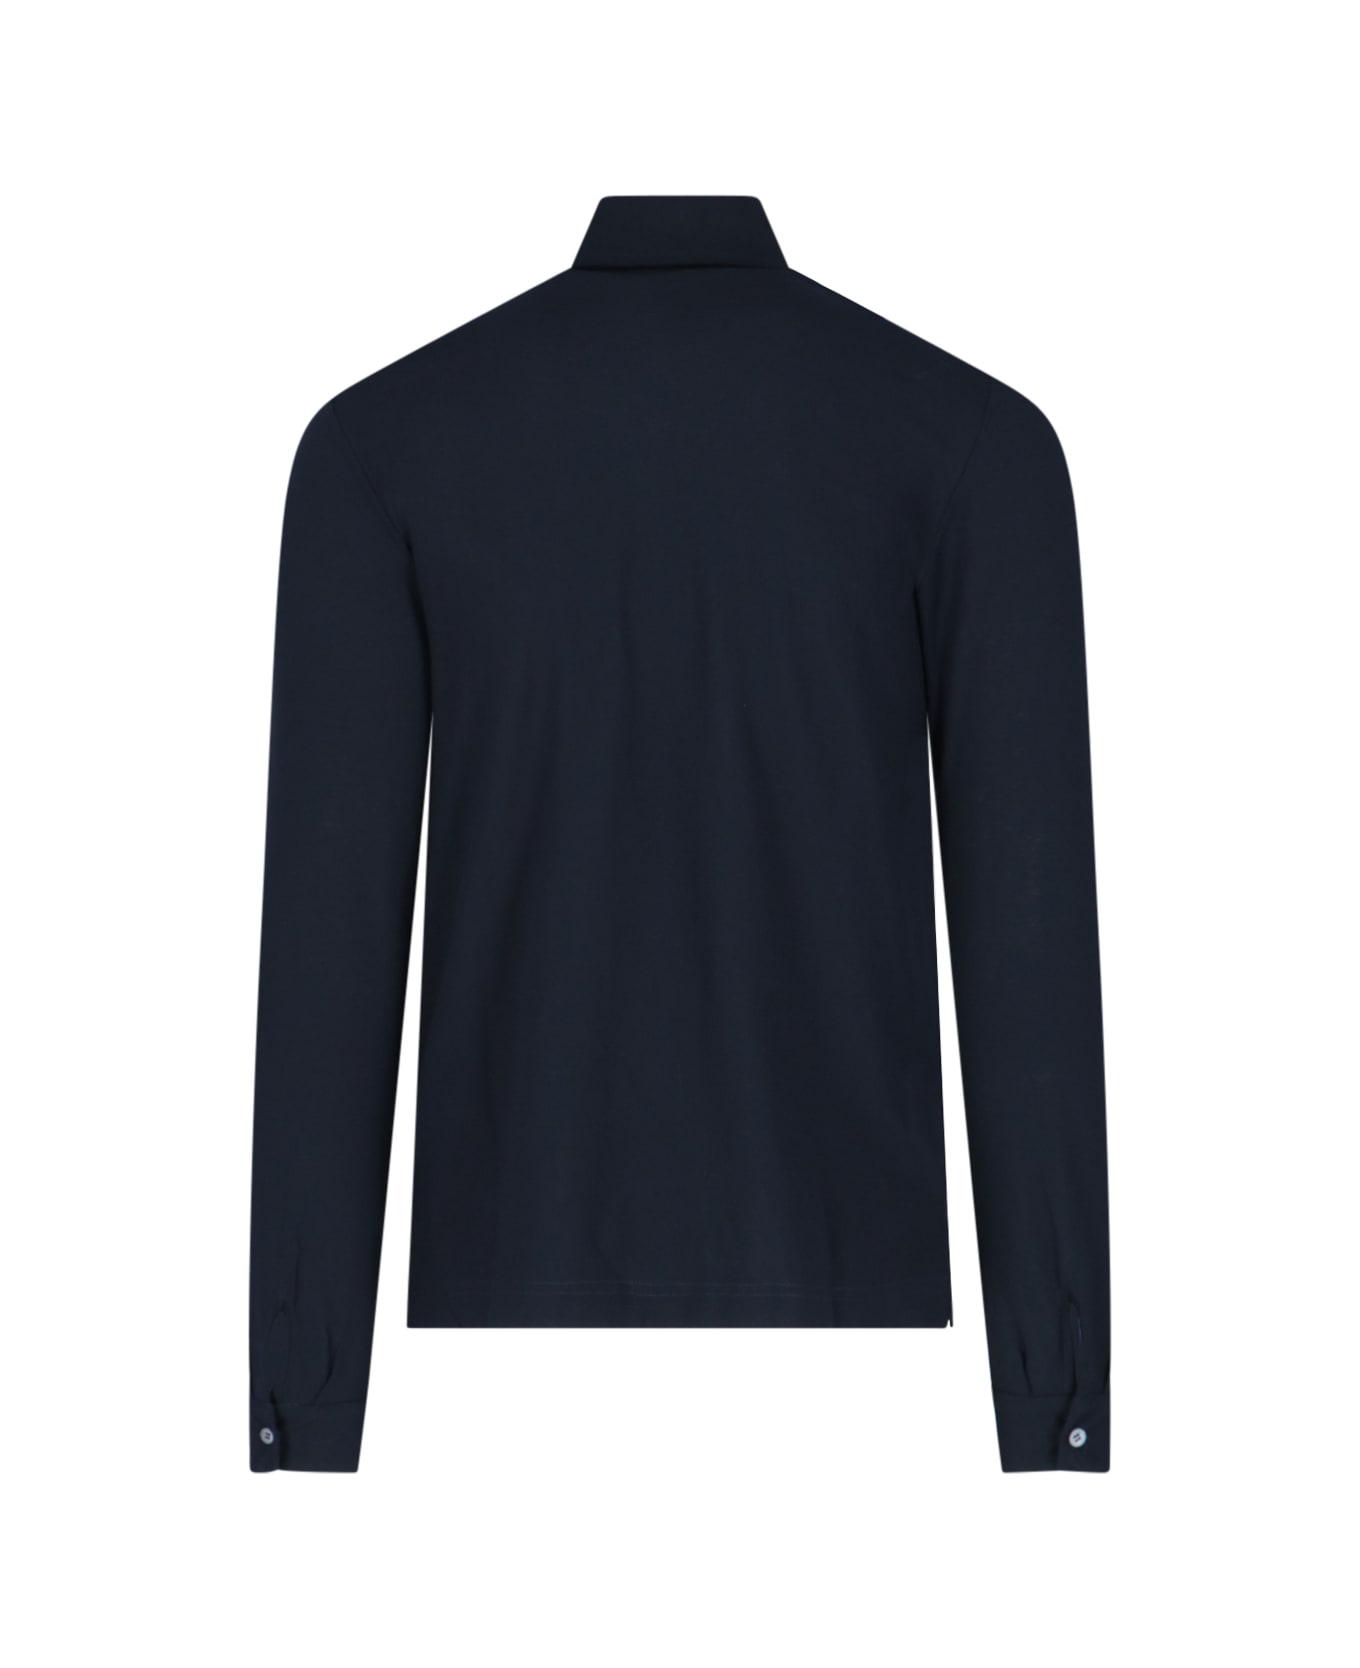 Zanone Polo Shirt - Blue